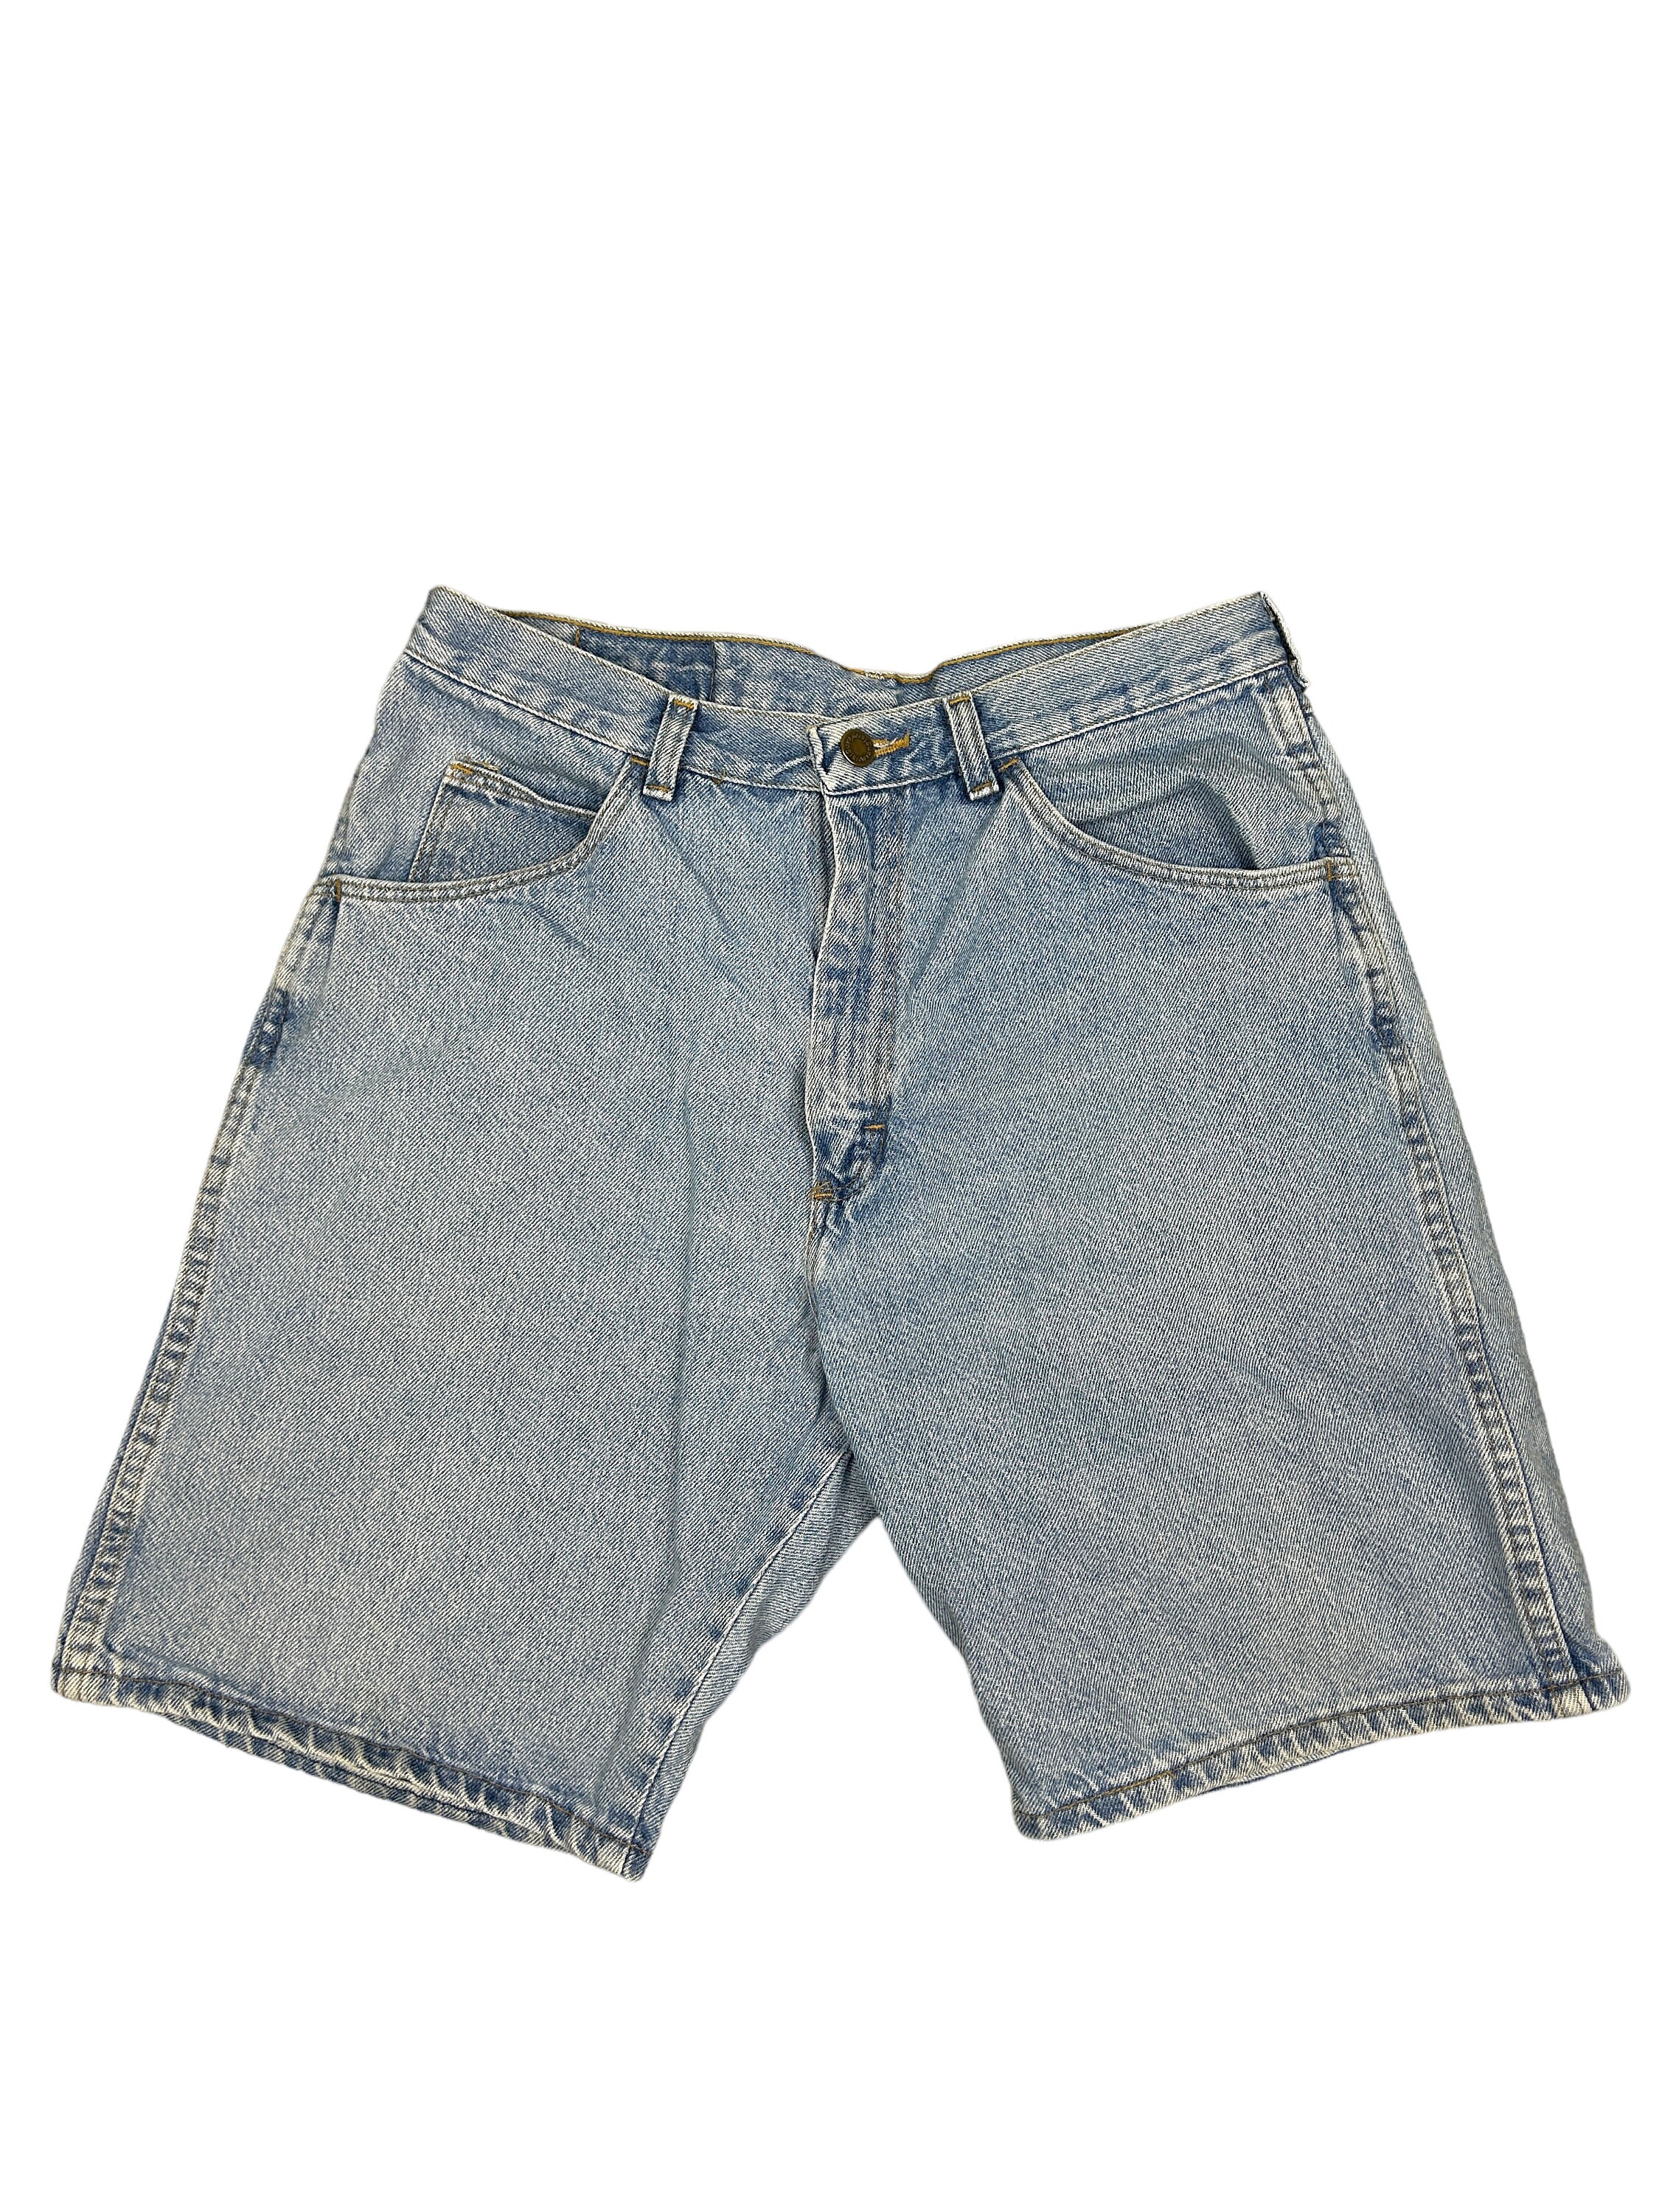 Vintage Levis SilverTab Jean Shorts Mens 31 Loose Fit Pleated Jorts 90s USA